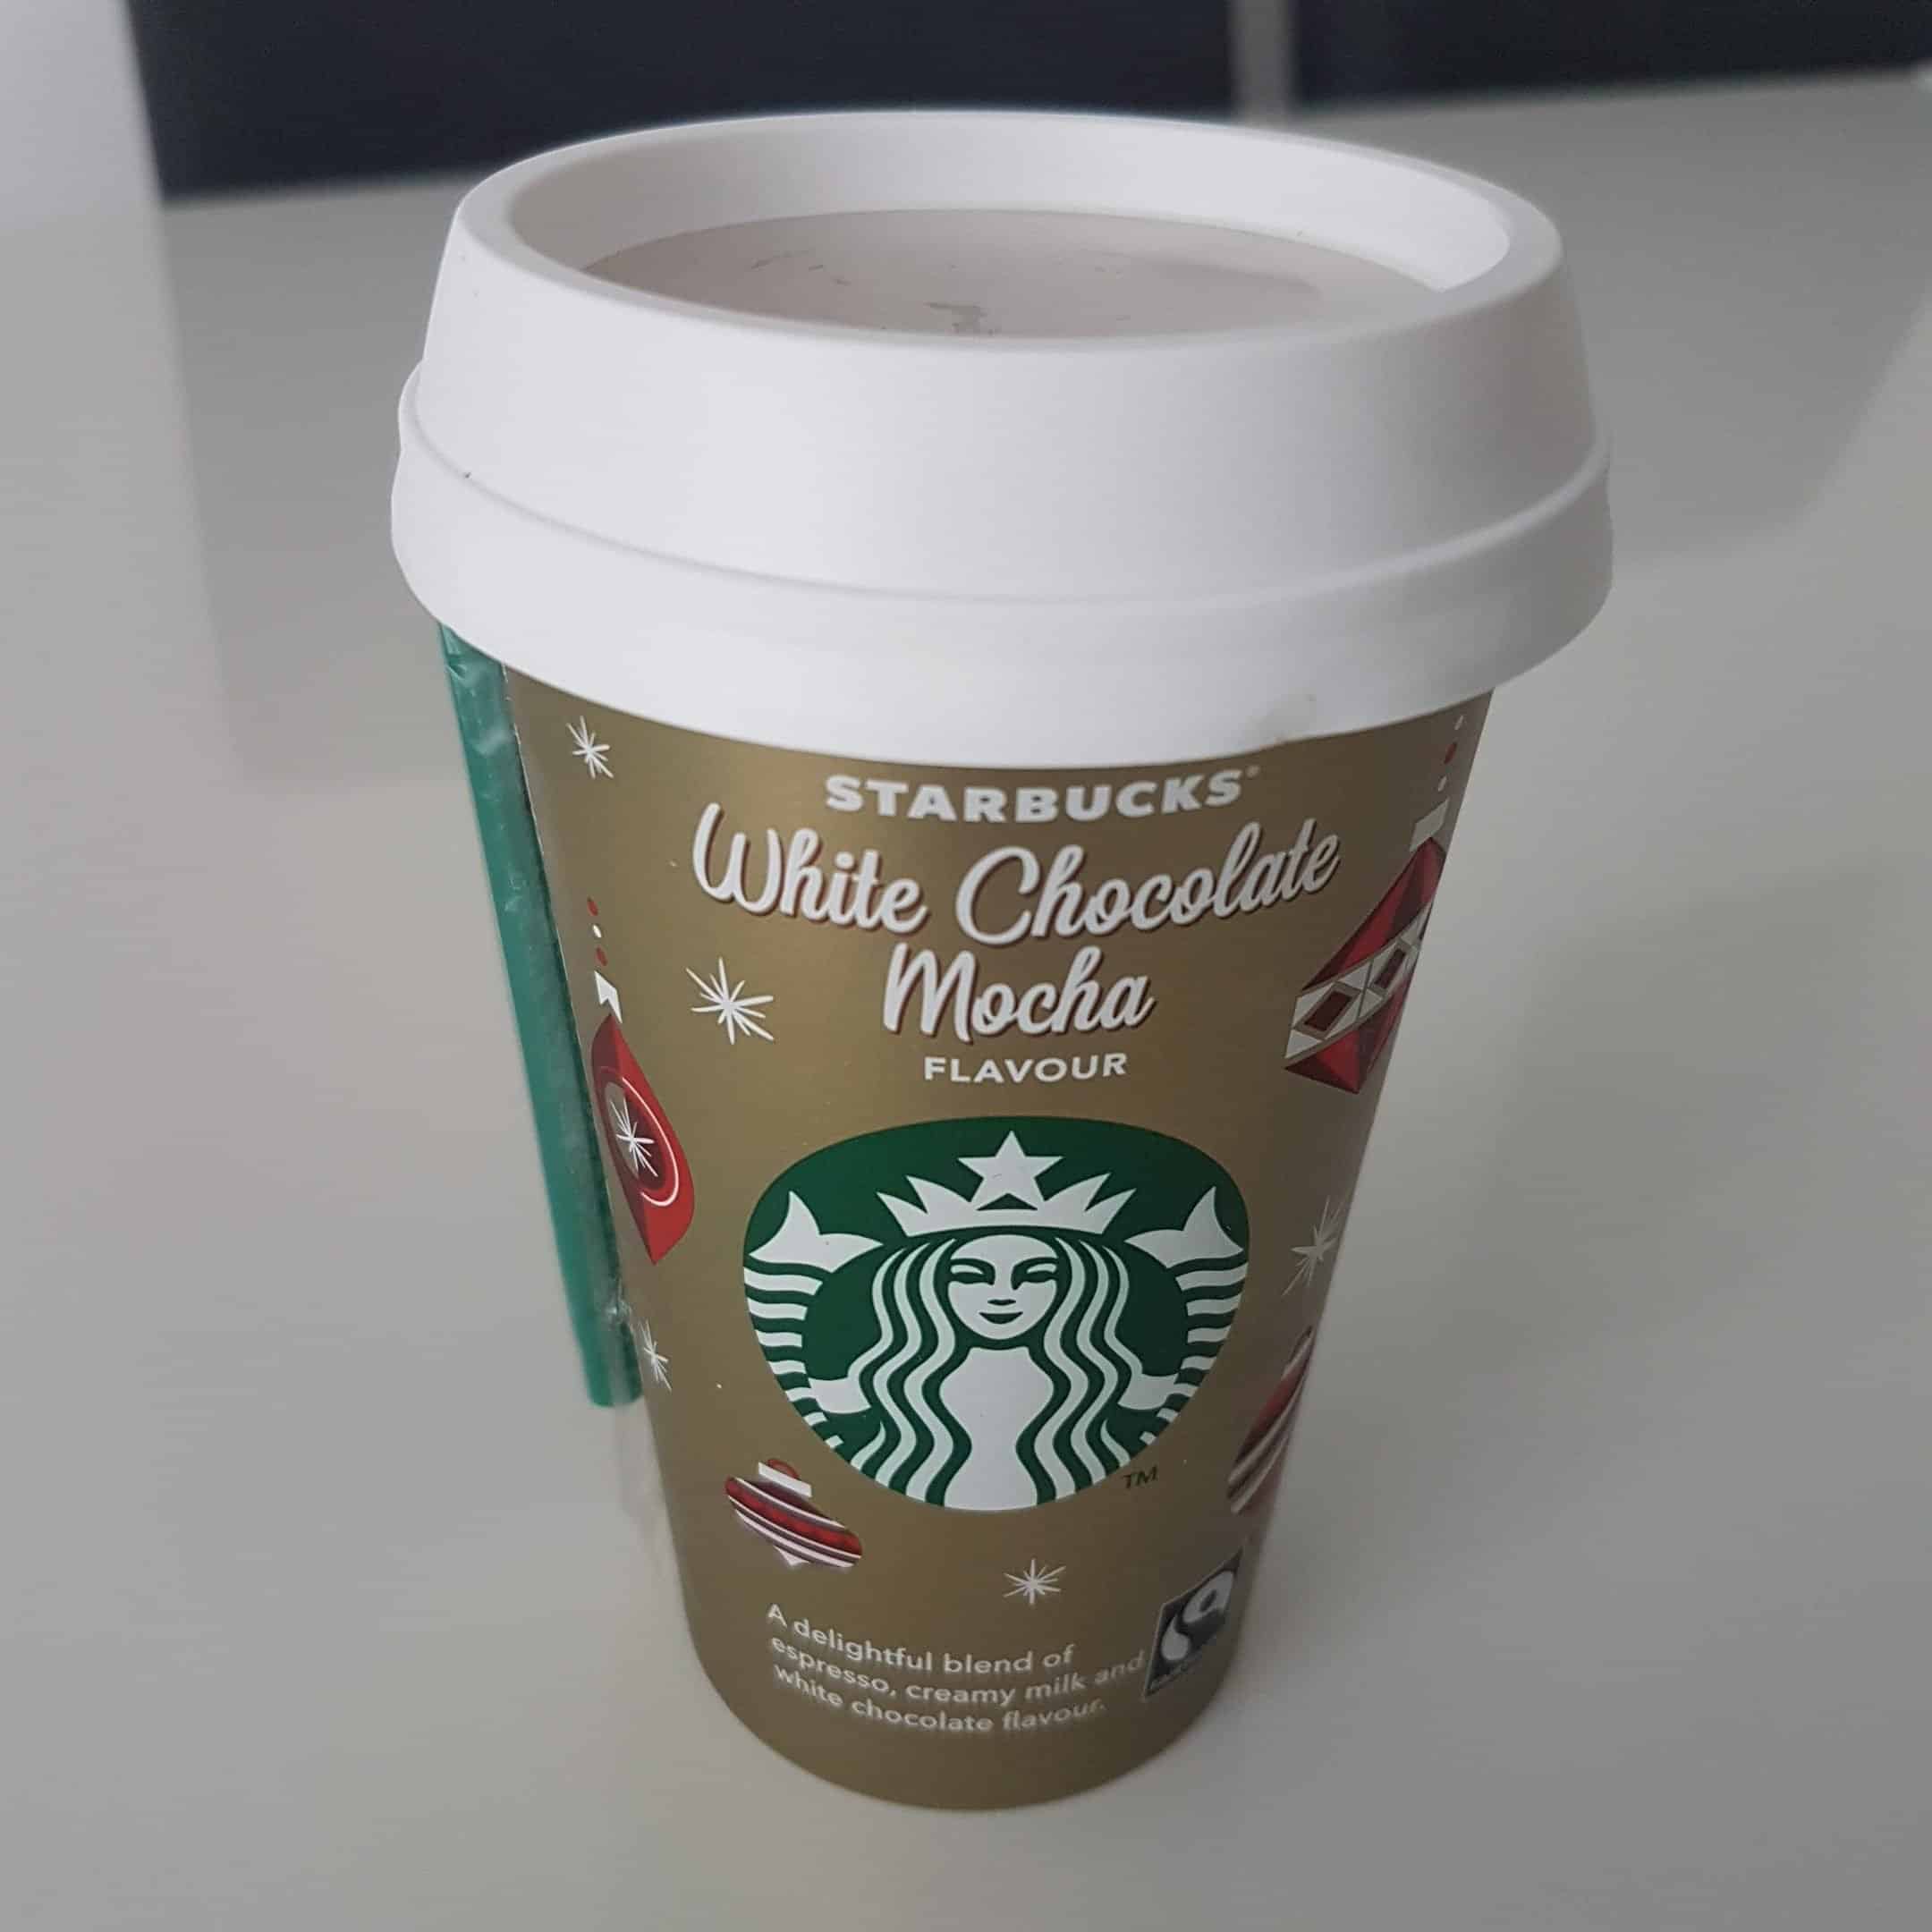 StarbucksÂ® â White Chocolate Mocha (flavour)